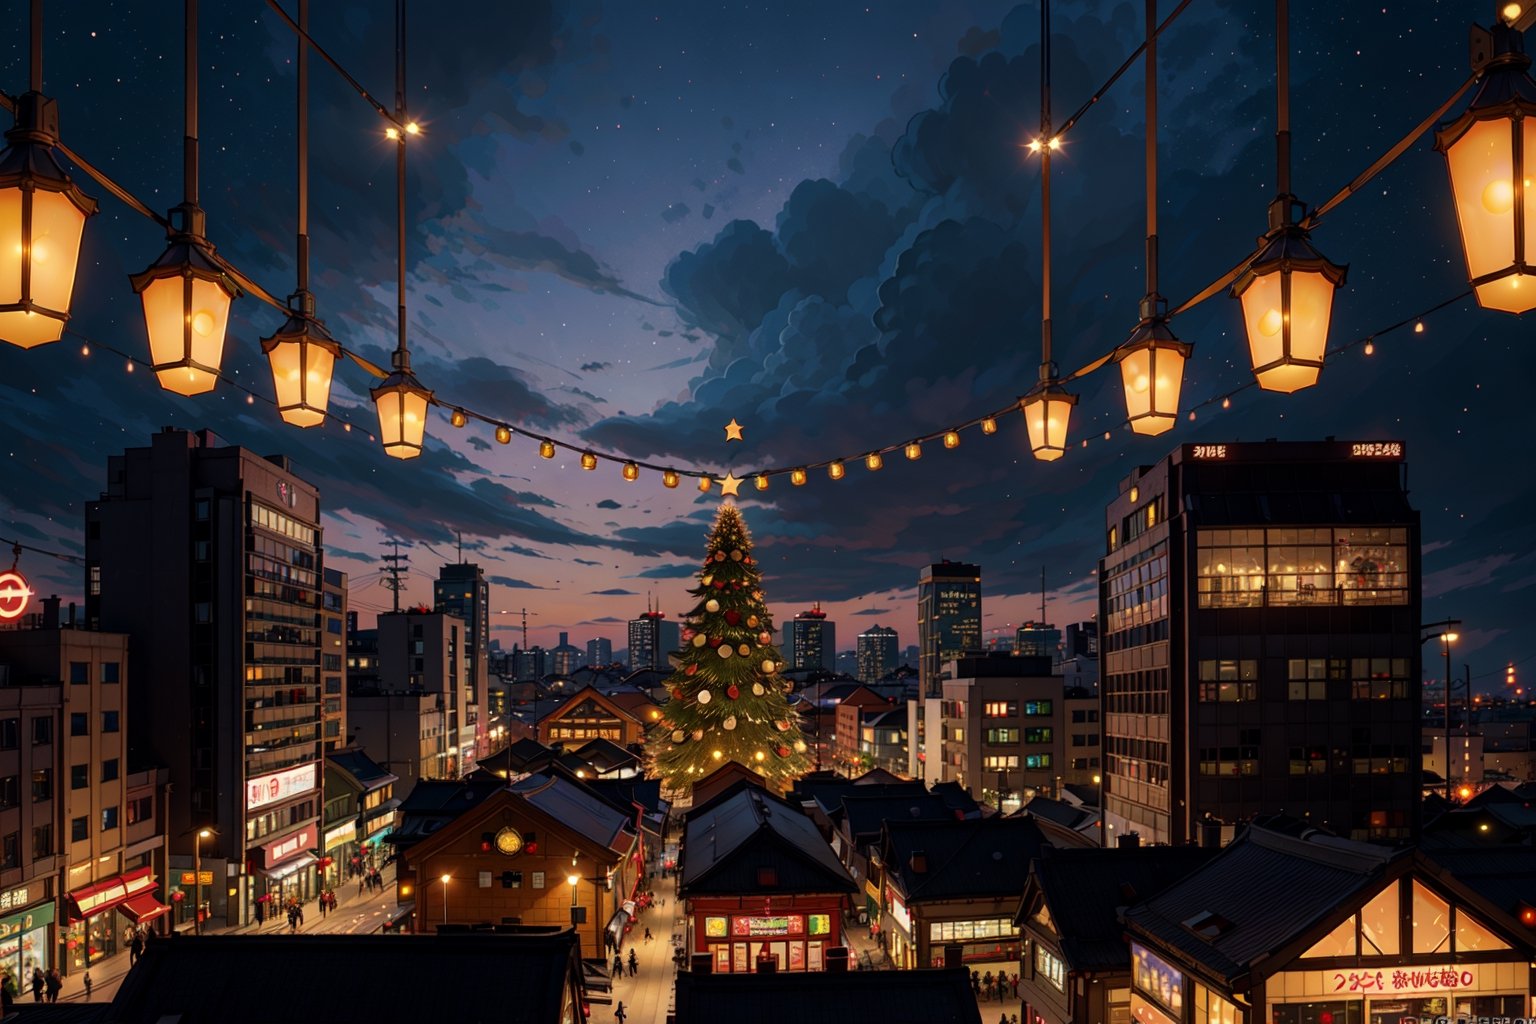 2023 christmas seoul city scenery, beauty, warm colors, anime style,Isometric